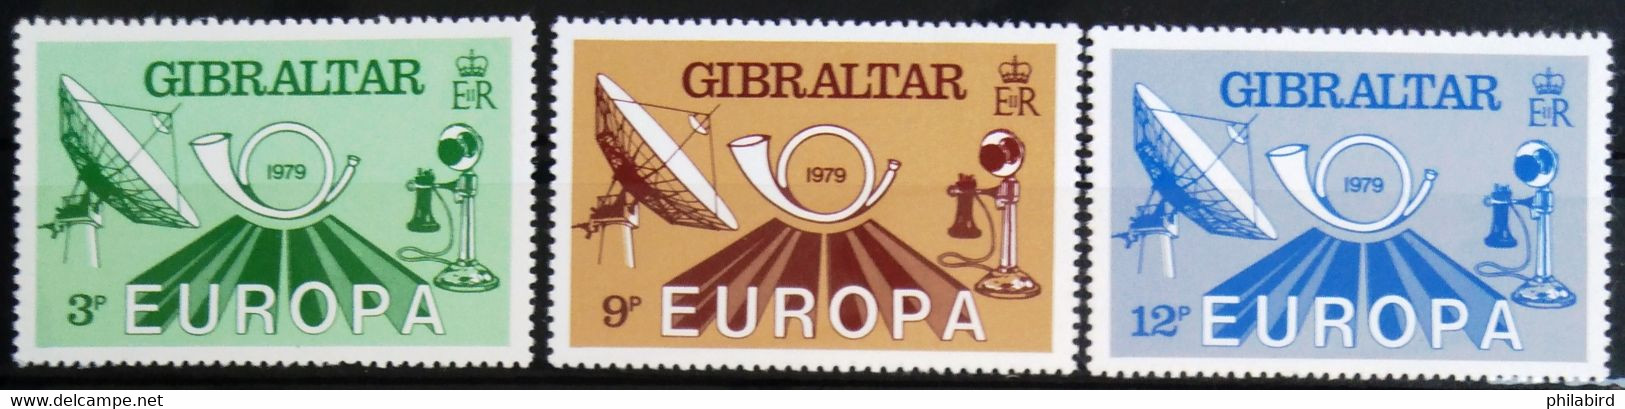 EUROPA 1979 - GIBRALTAR                   N° 393/395                     NEUF** - 1979